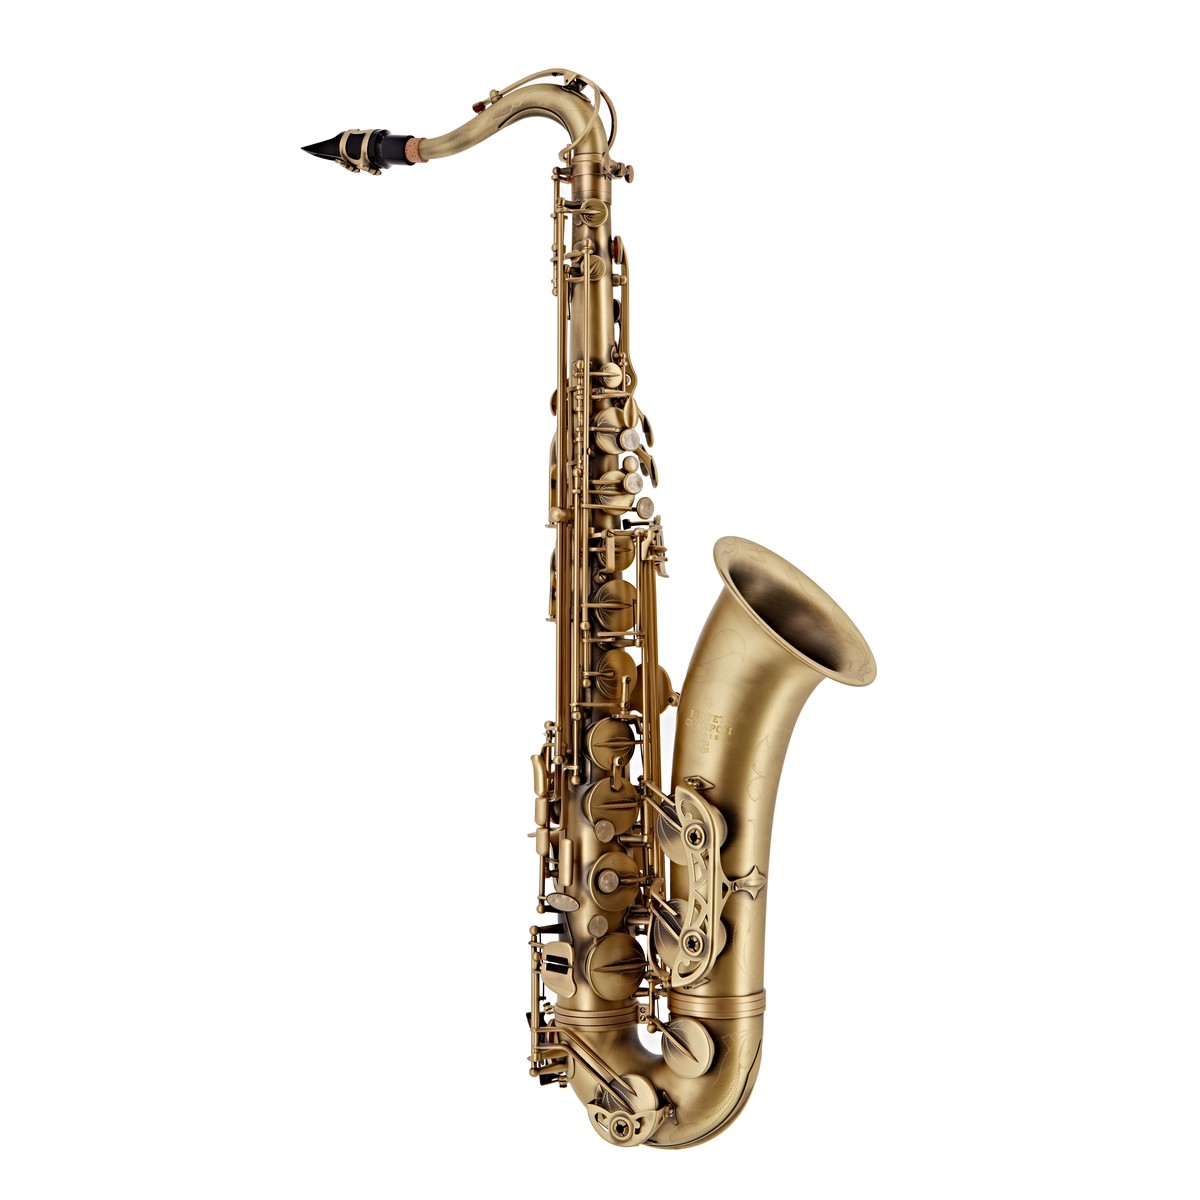 Buffet Crampon 400 Series Tenor Saxophone - Premium  from Buffet Crampon - Just $3844! Shop now at Poppa's Music